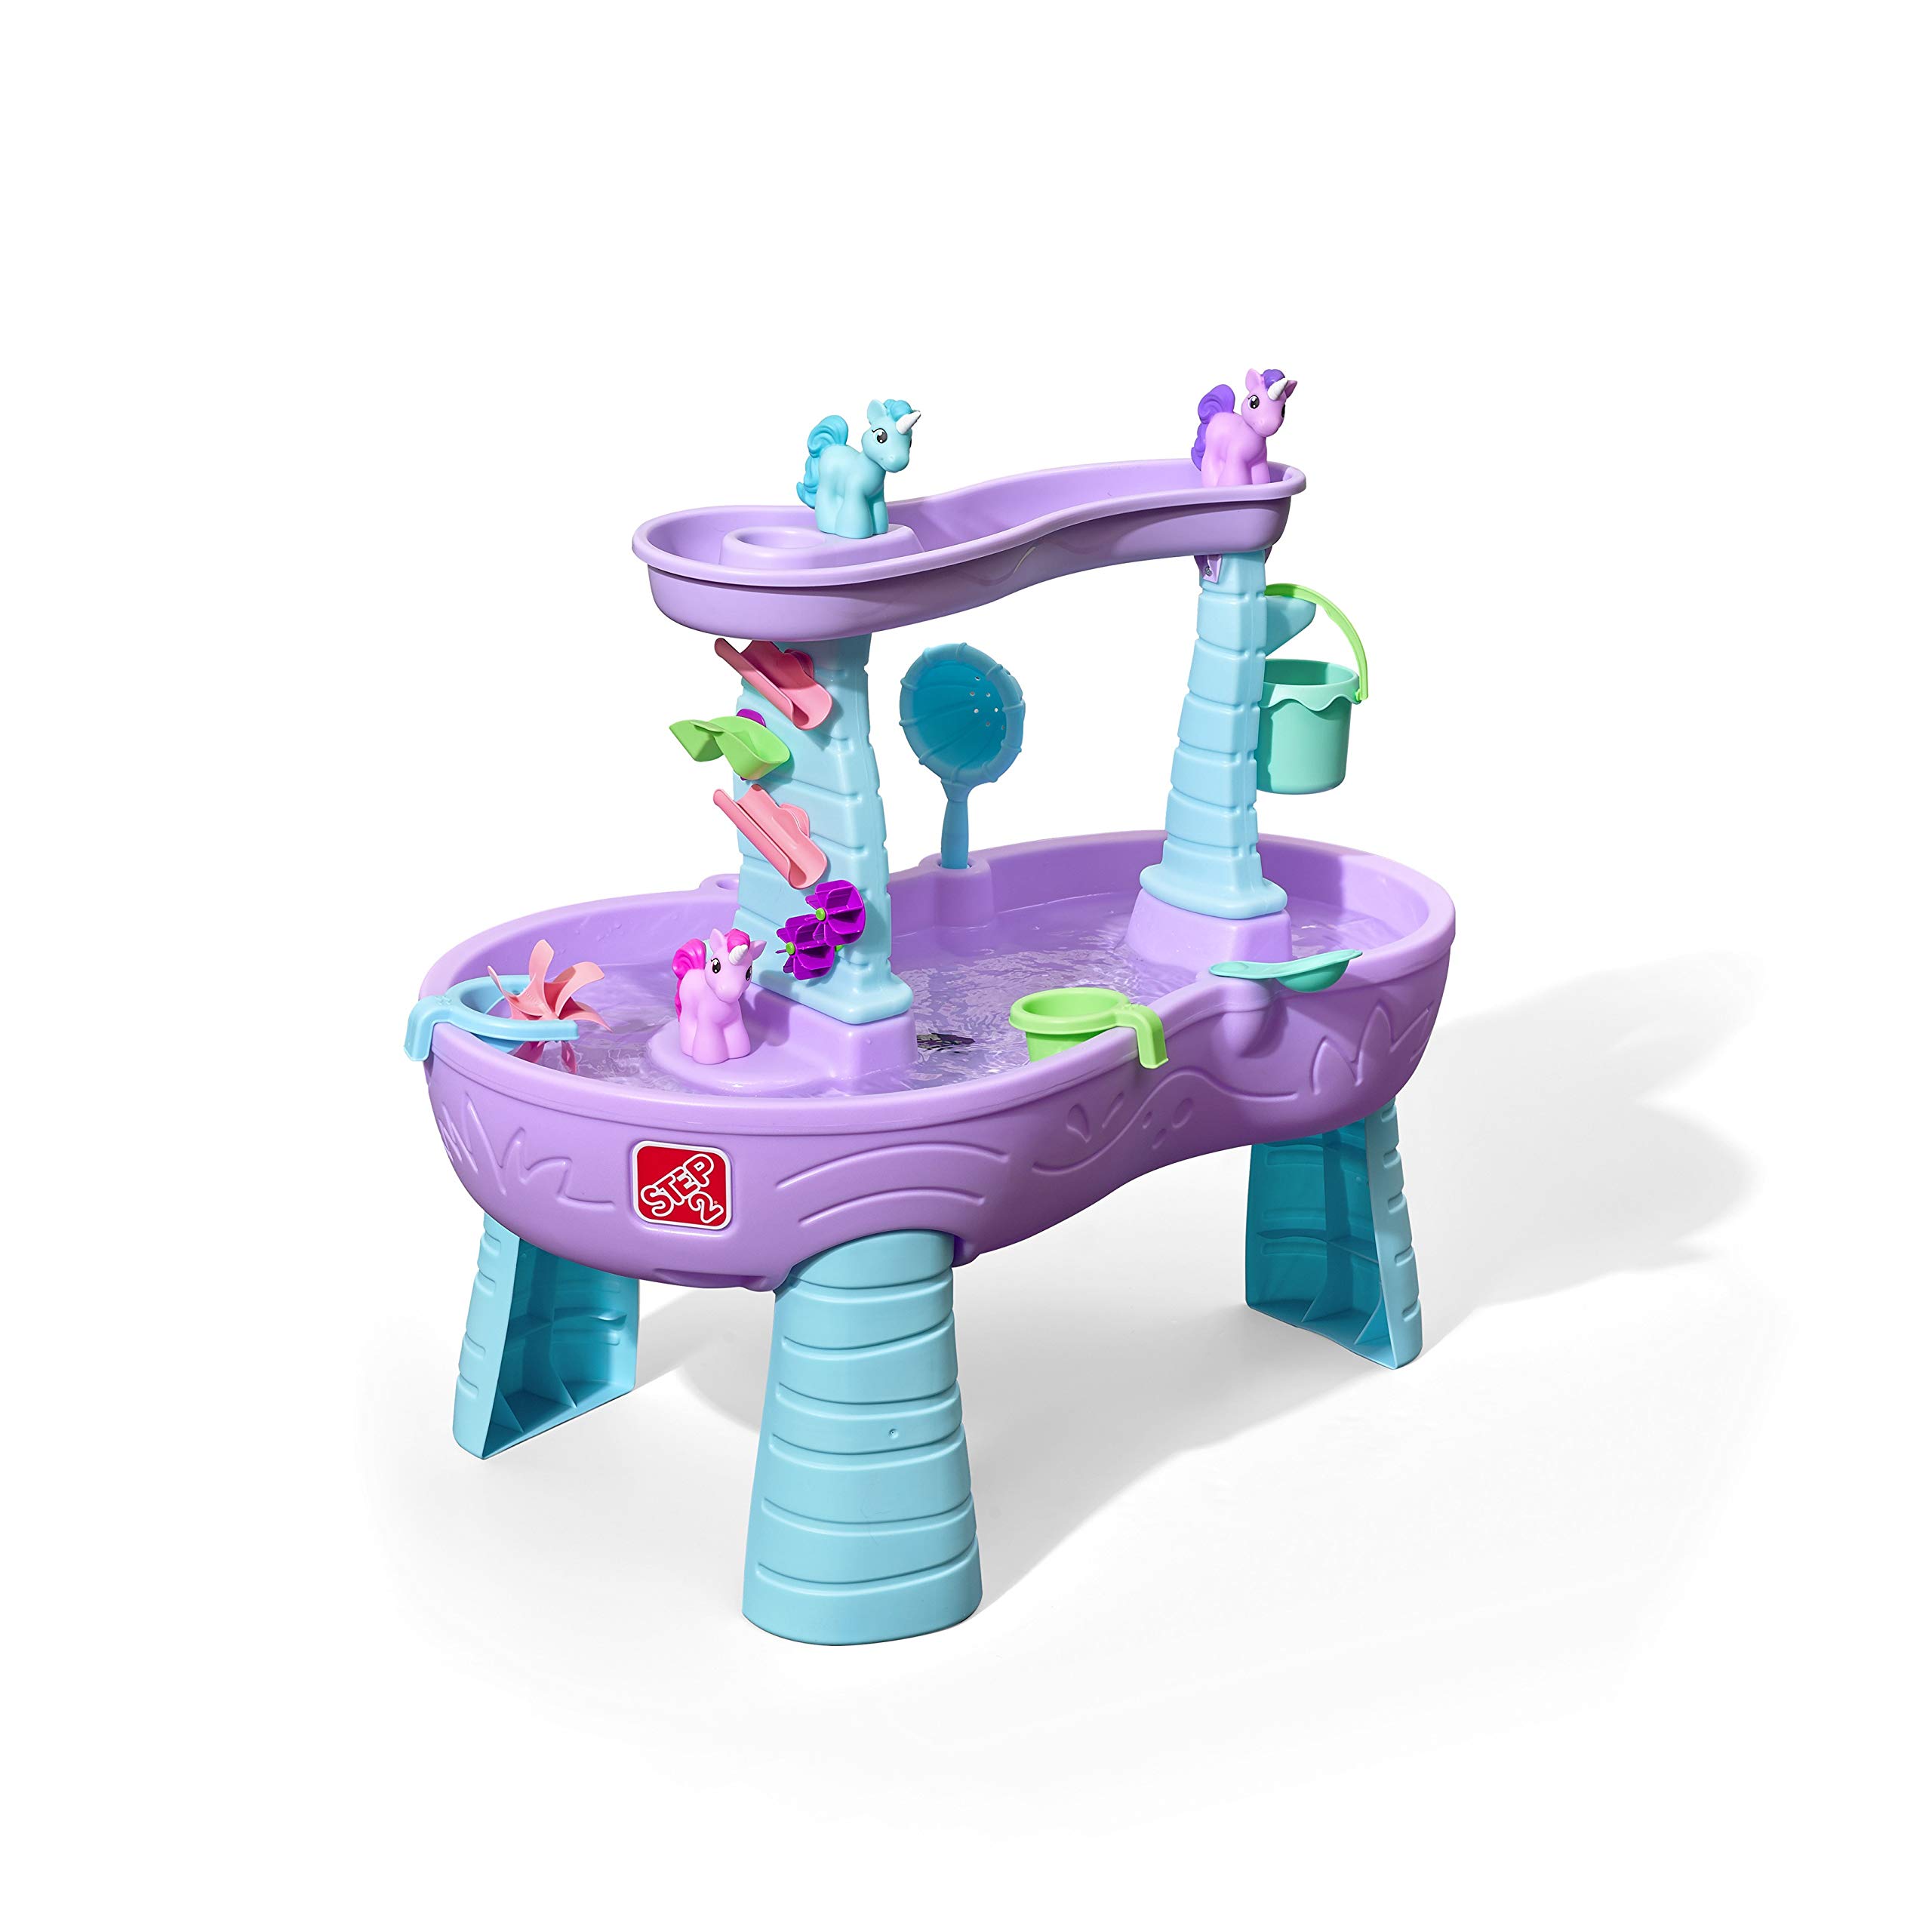 Step2 دش مطري وطاولة يونيكورن المائية للأطفال طاولة اللعب المائية الأرجواني مع مجموعة ملحقات يونيكورن من 13 قطعة